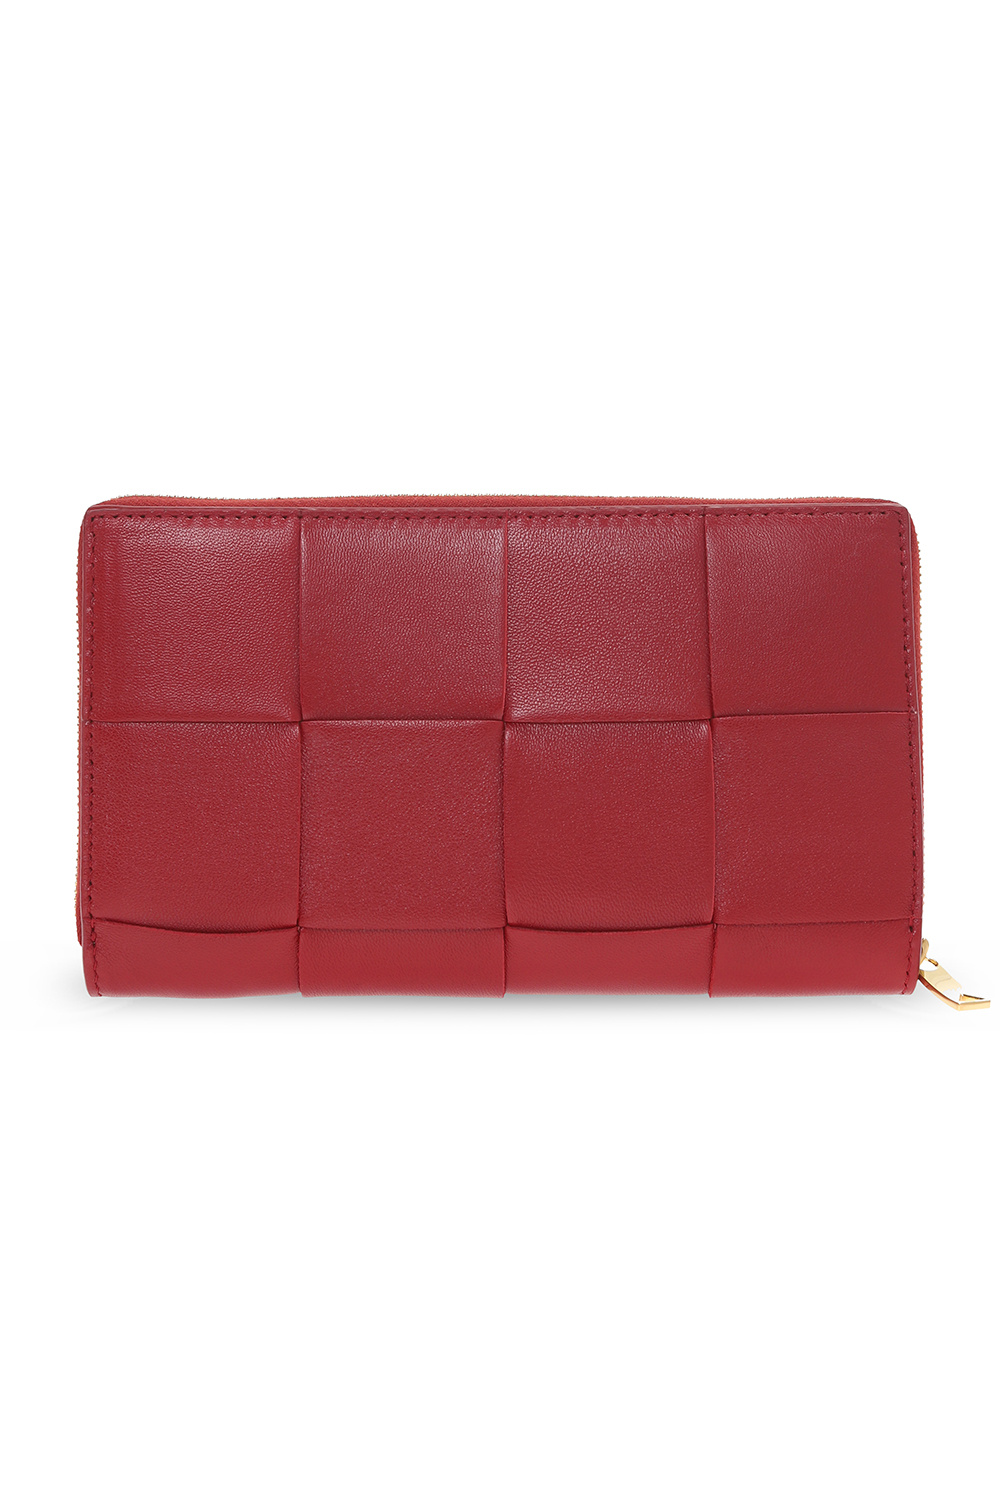 Bottega Veneta Wallet with  ‘Intrecciato’ weave